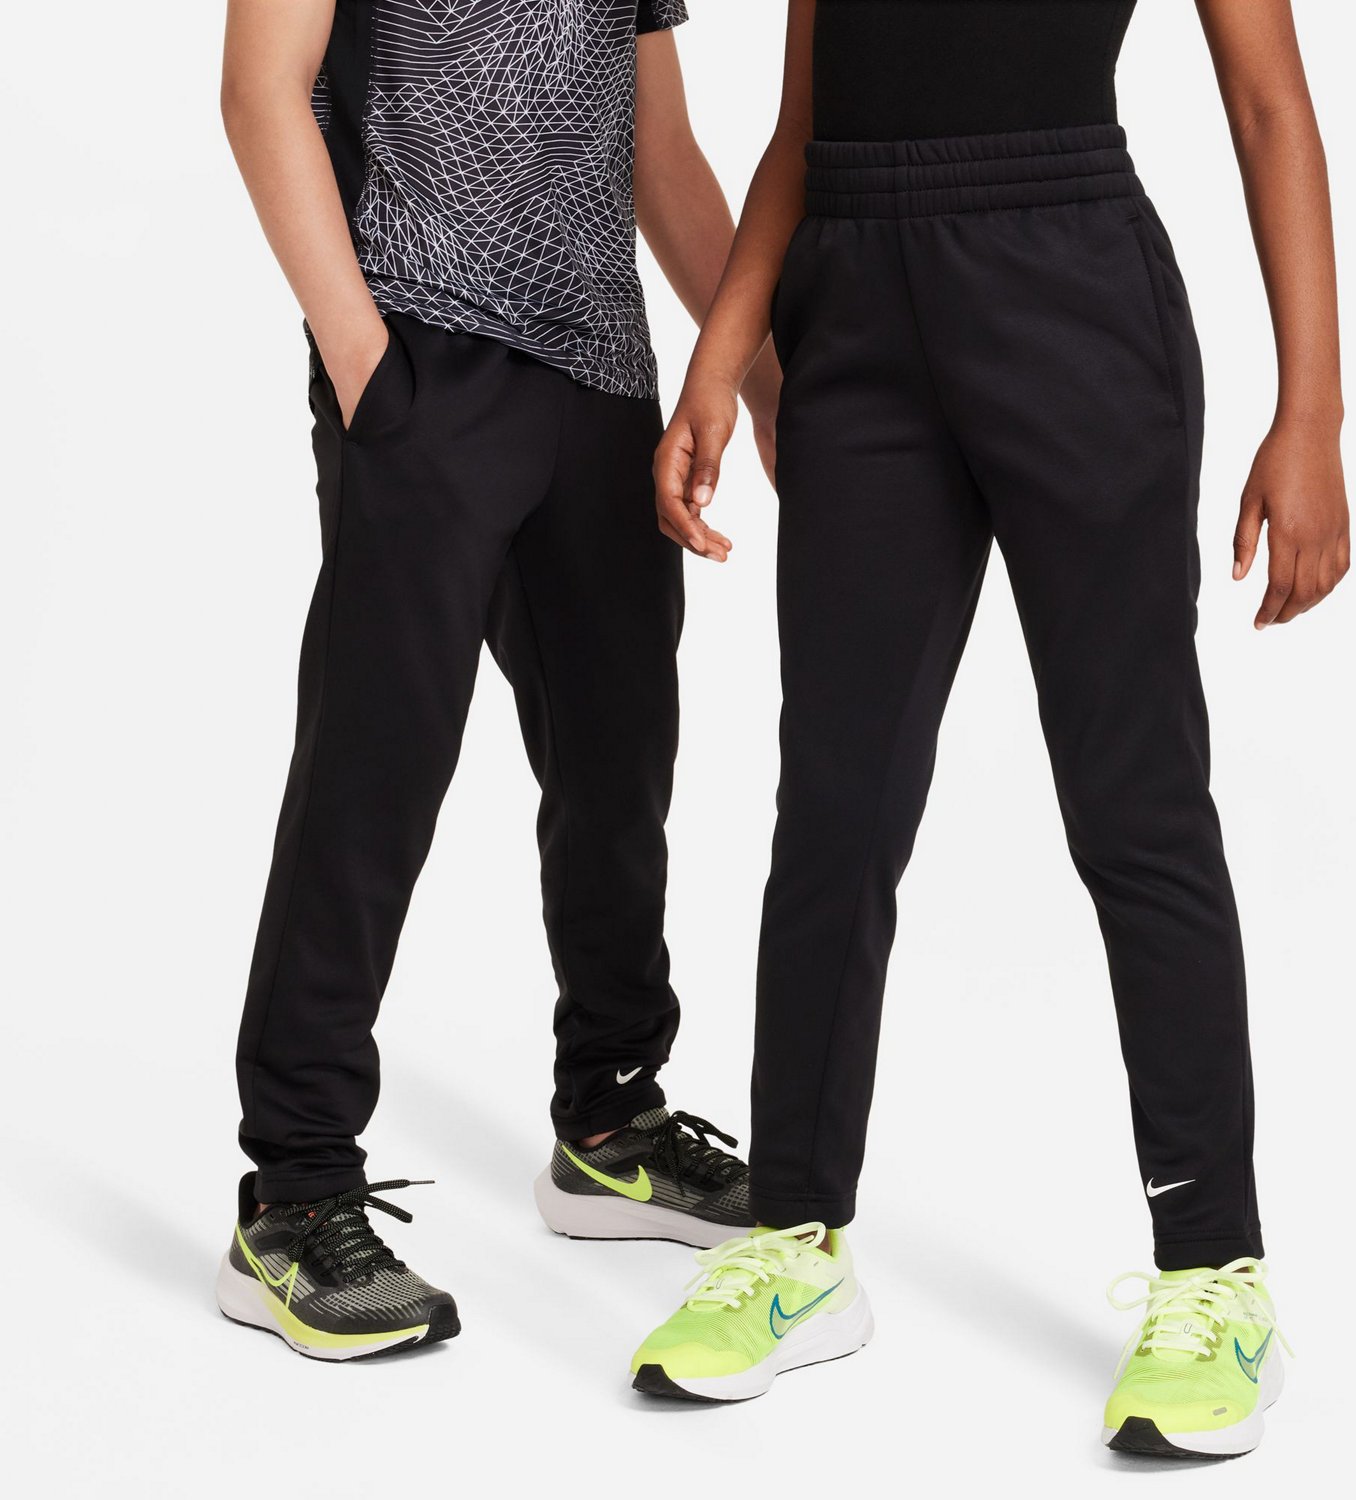 | Guaranteed & Sweatpants Nike Price Boys\' Joggers Match